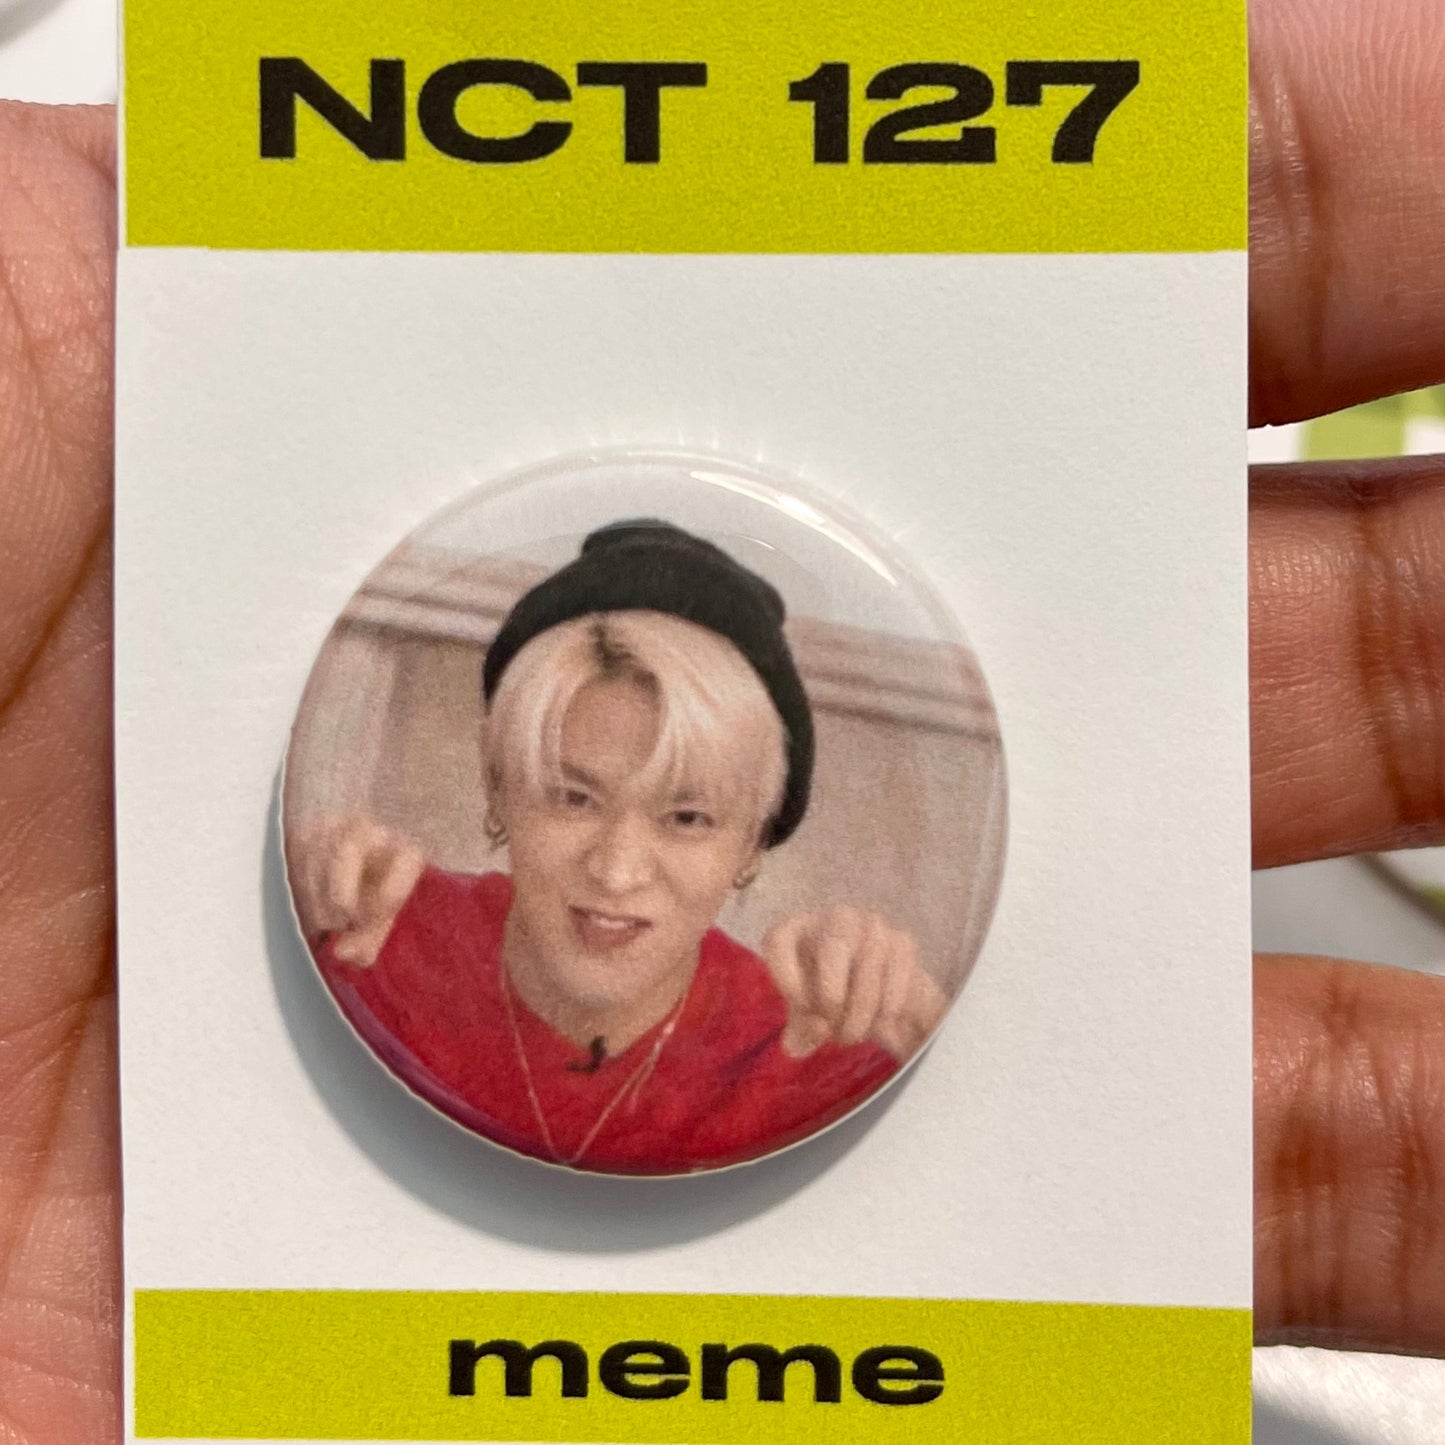 NCT 127 Meme Buttons